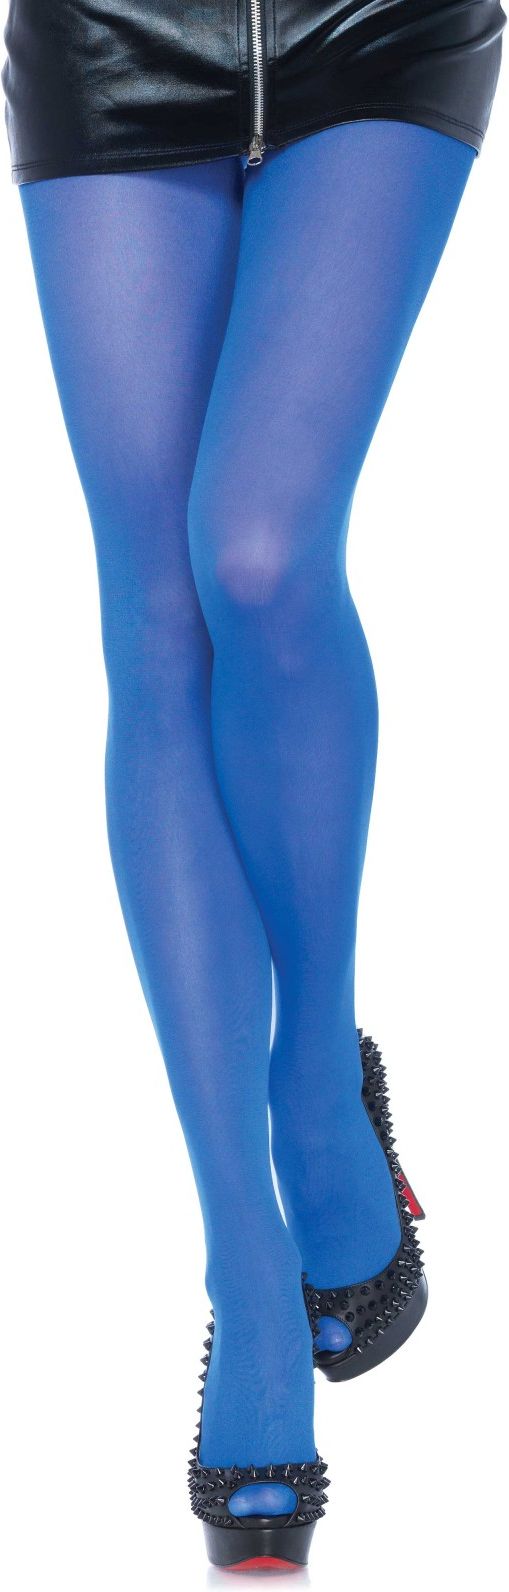 Blauwe nylon panty